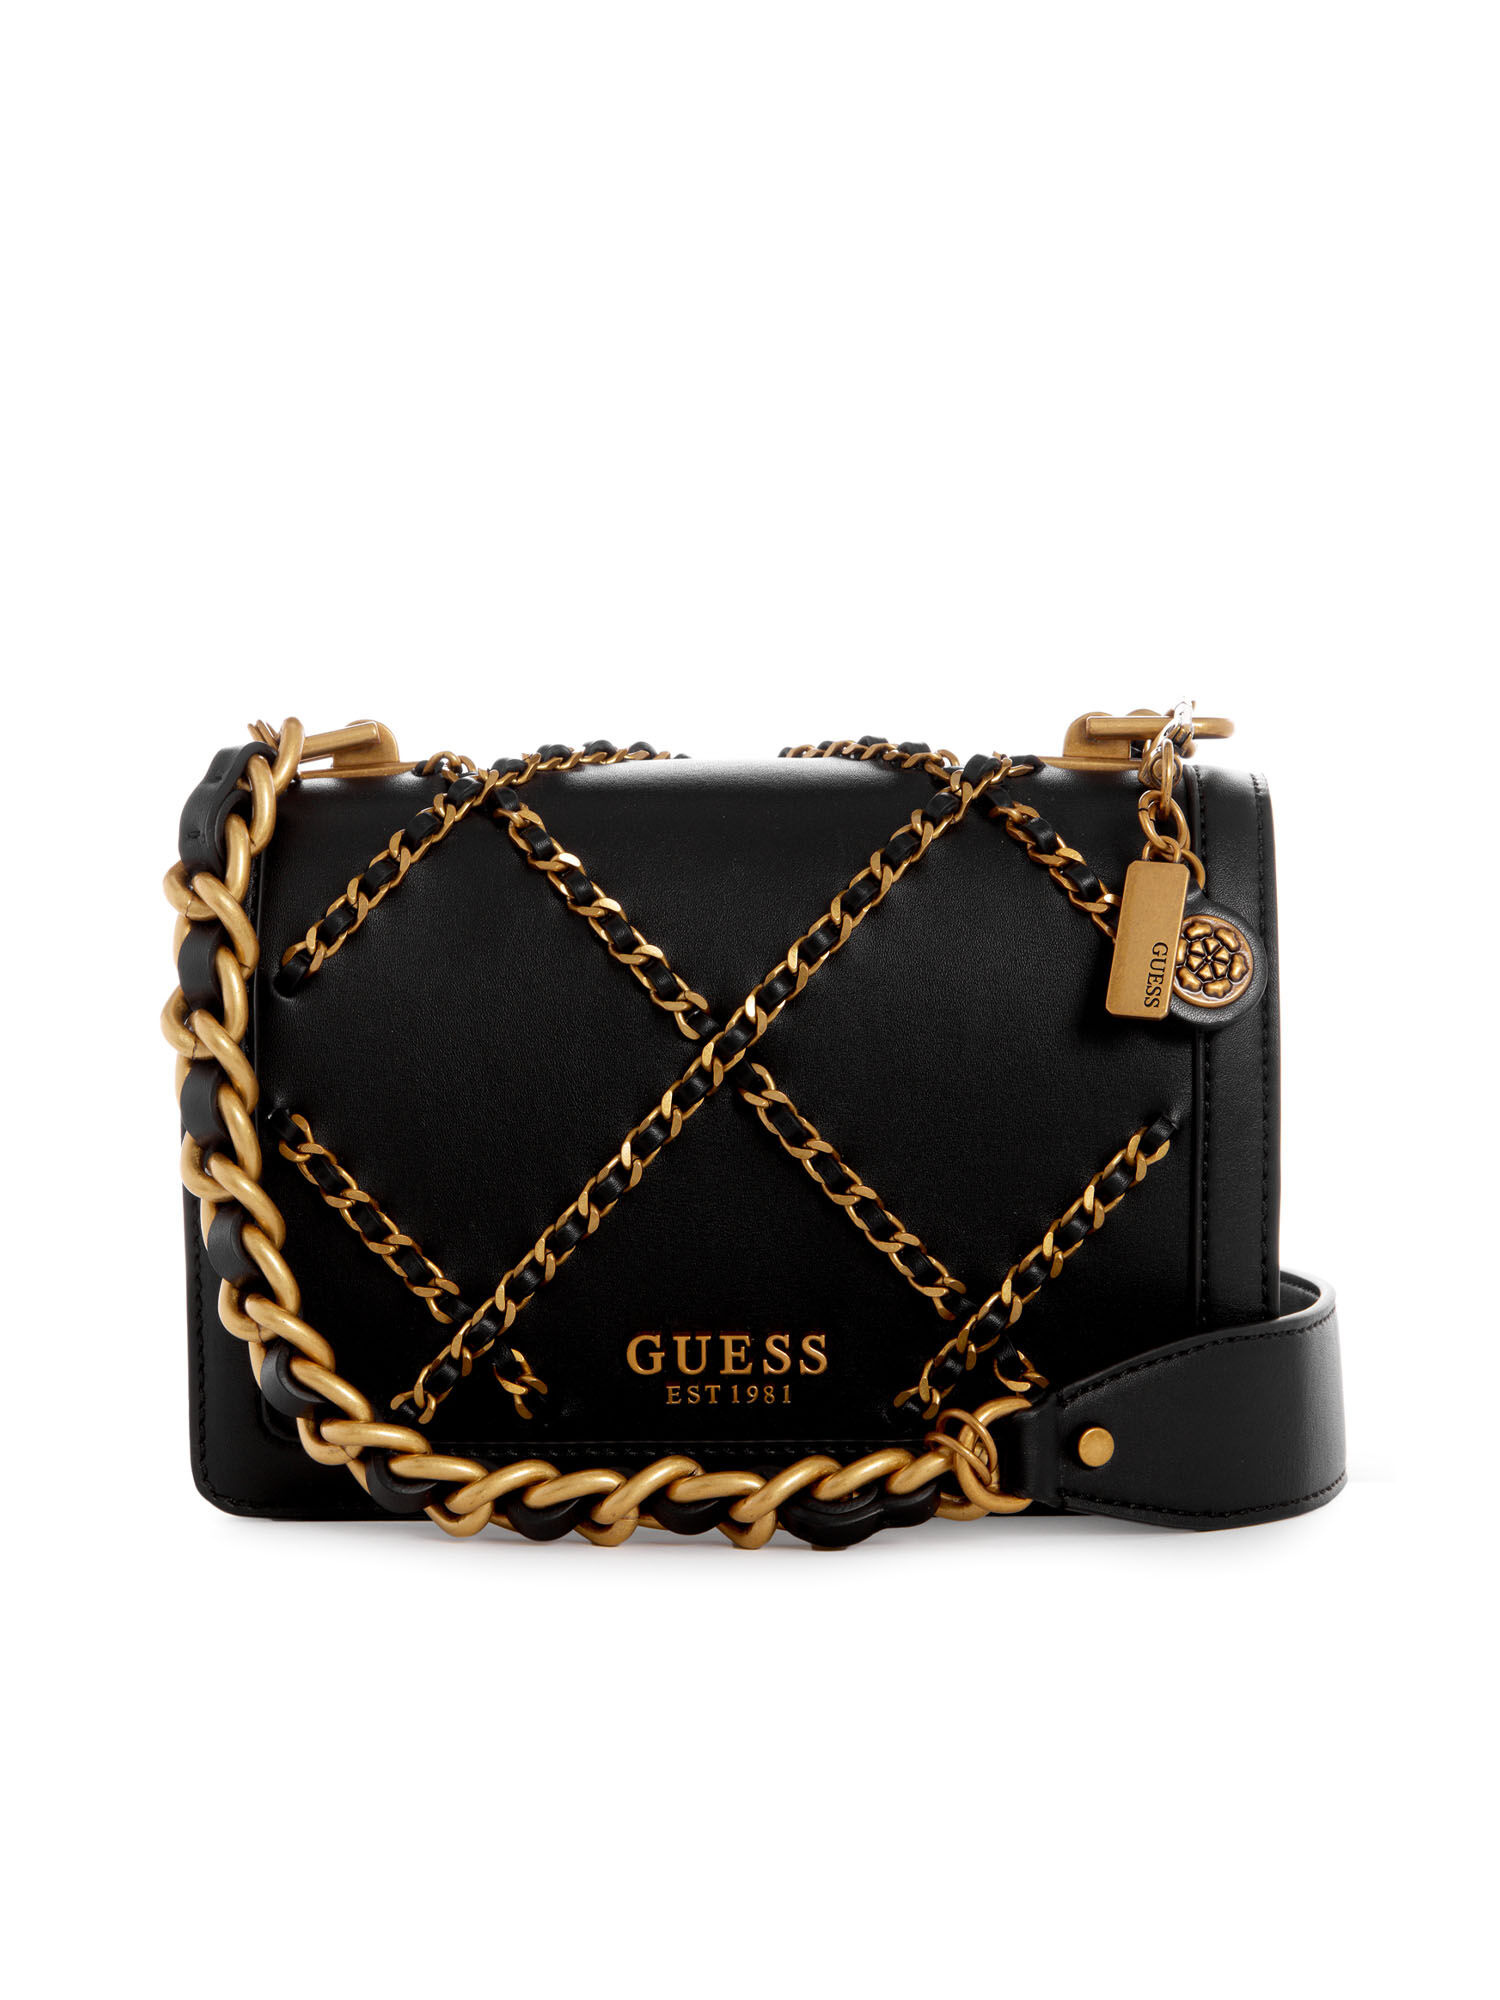 GUESS | CROSSBODY BAG | 135$ | 100% ORIGINAL BRANDS #guess #handbags #sale  #fashion #style #trend #brands #usshoplb | Instagram